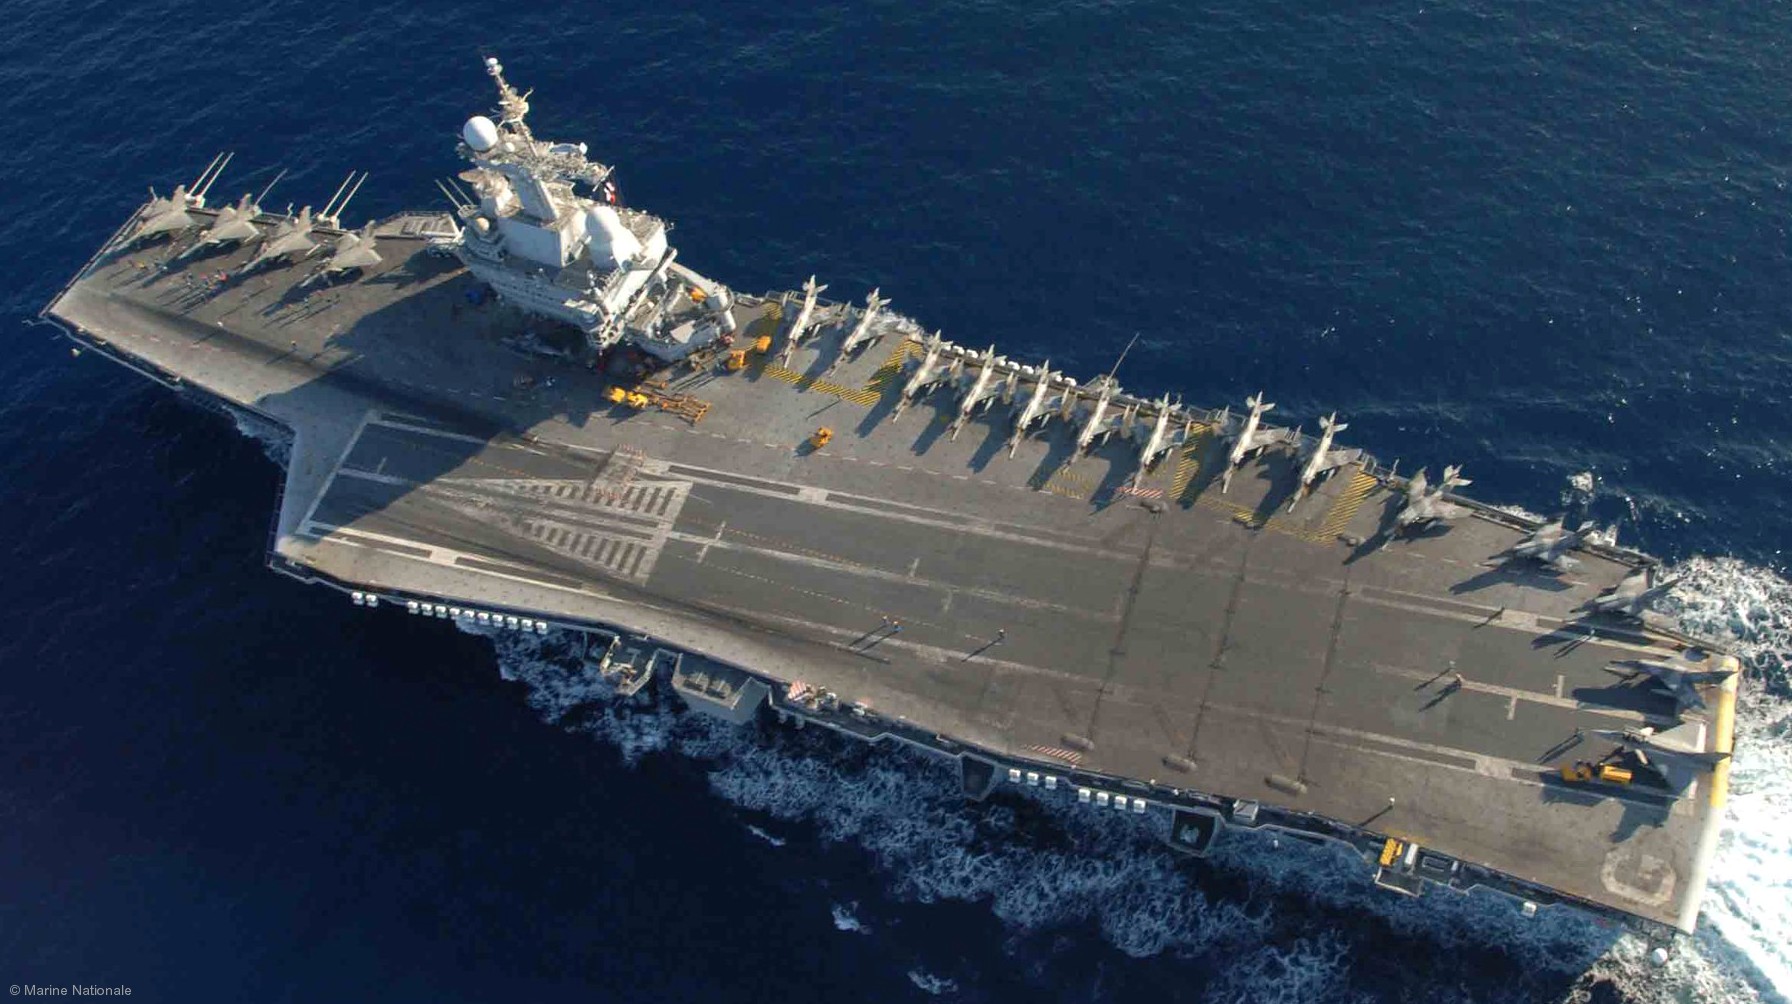  r-91 fs charles de gaulle aircraft carrier french navy 36 flight deck